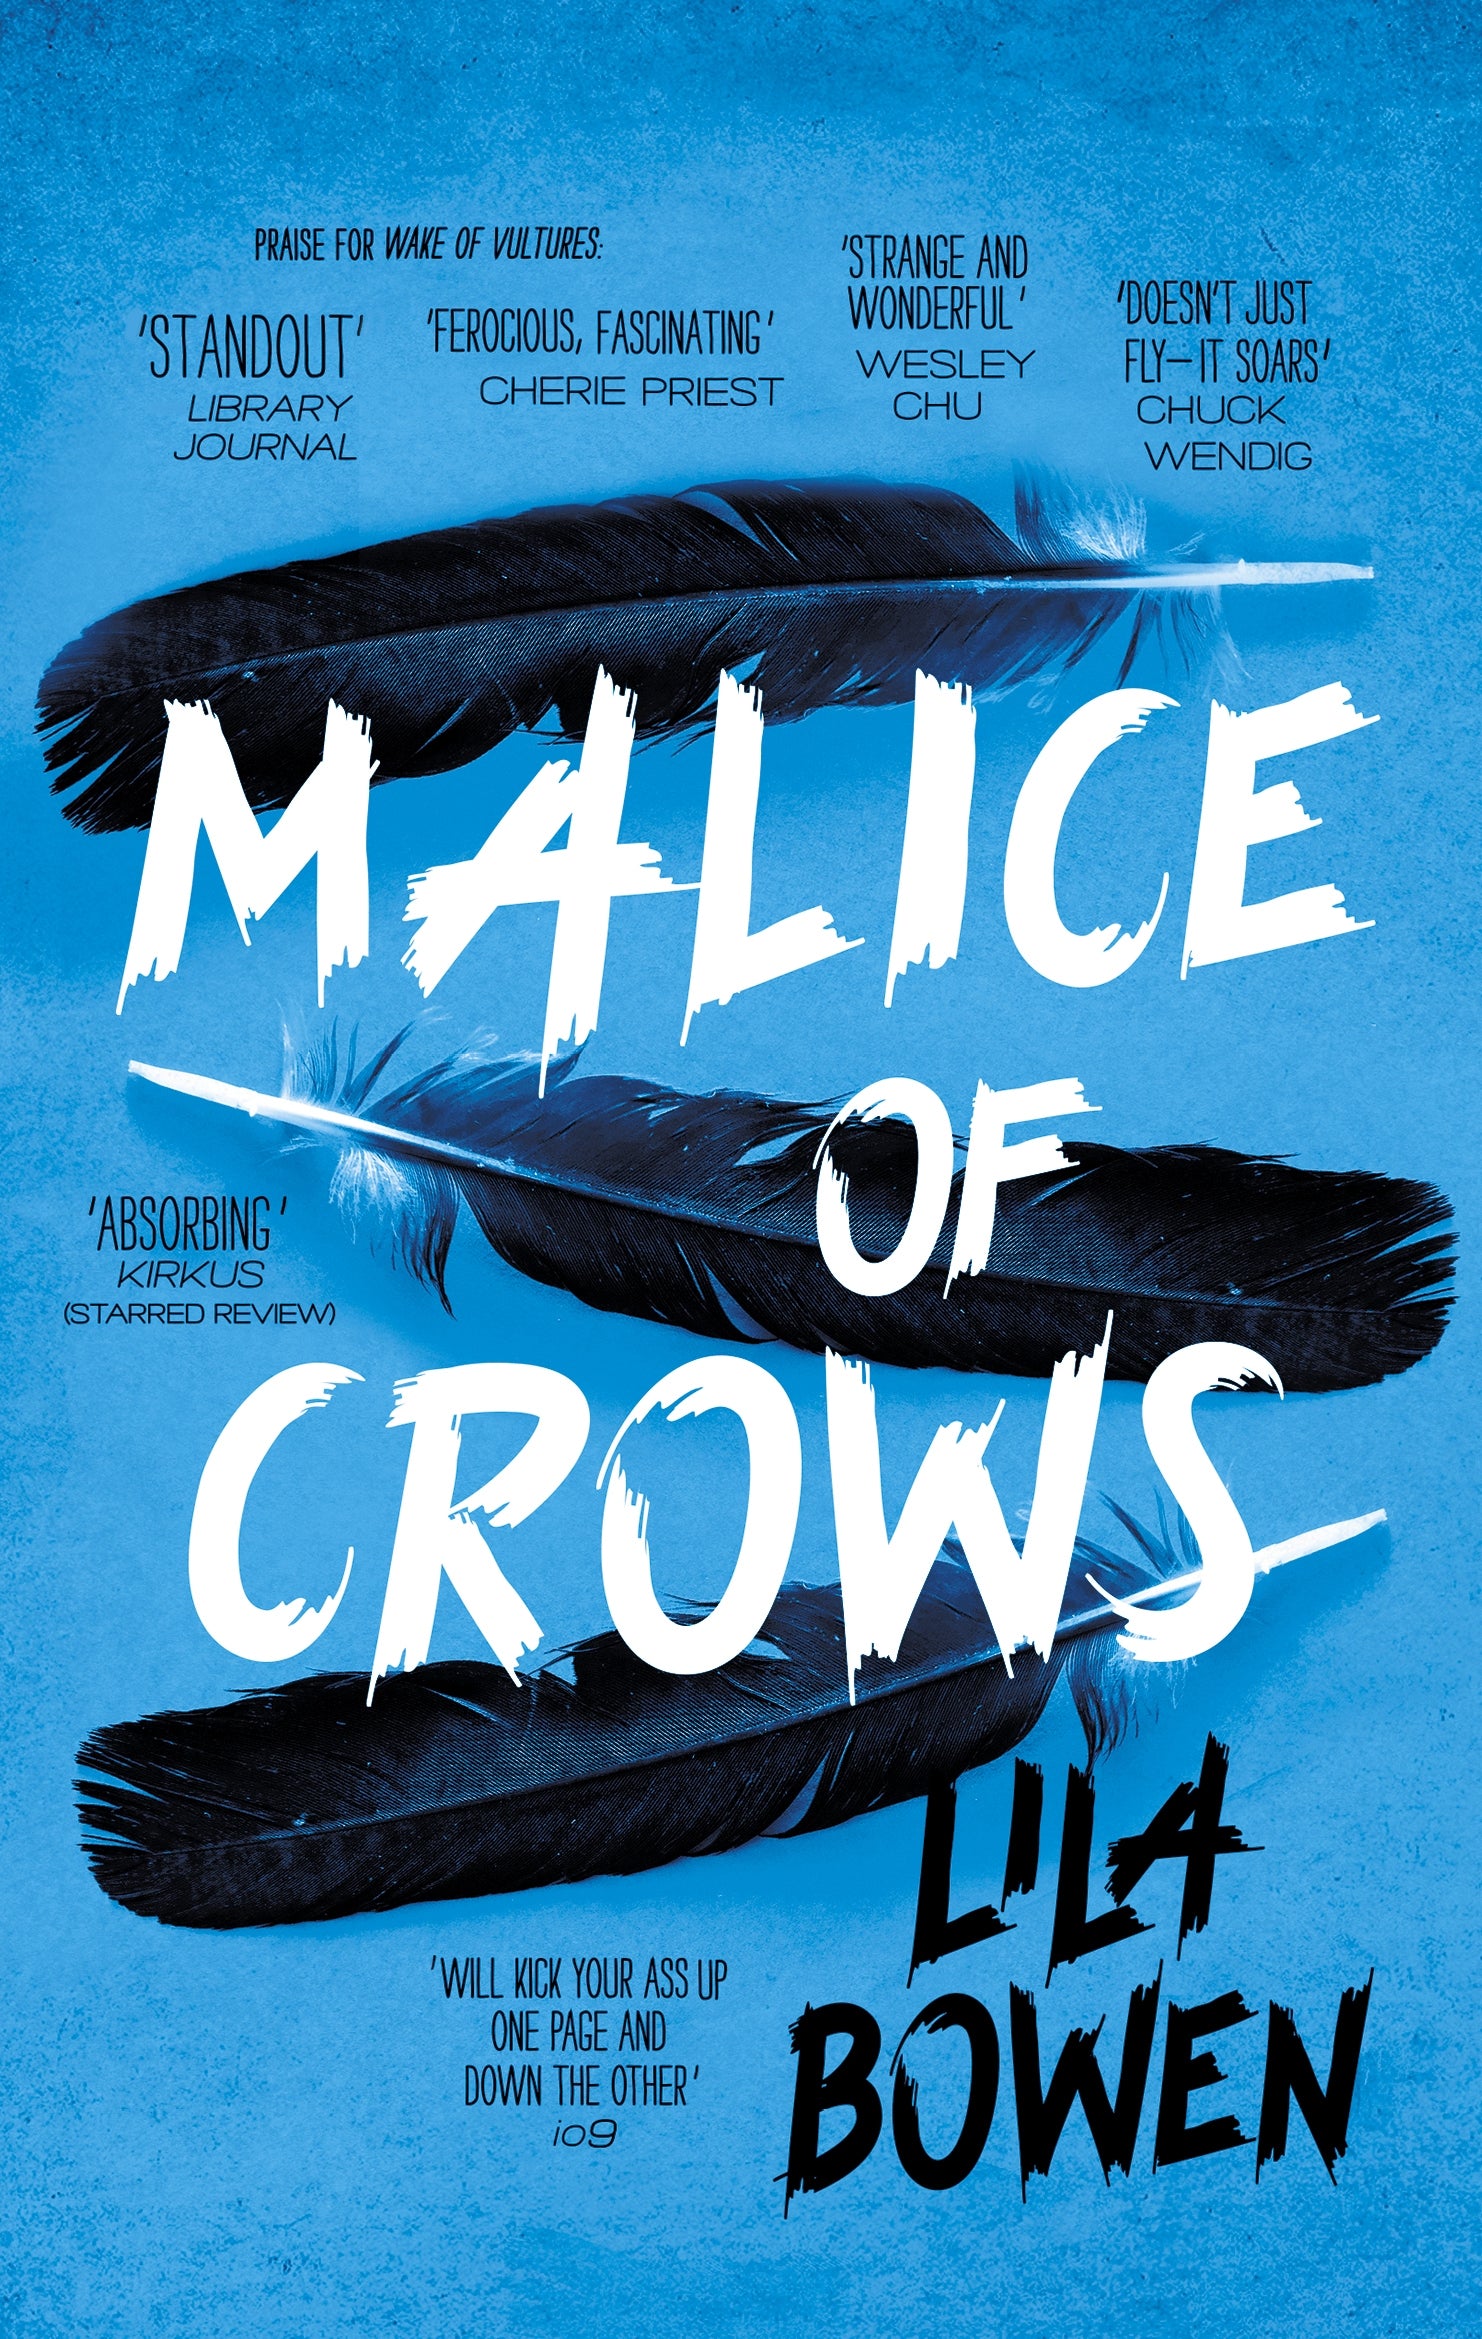 Malice of Crows by Lila Bowen